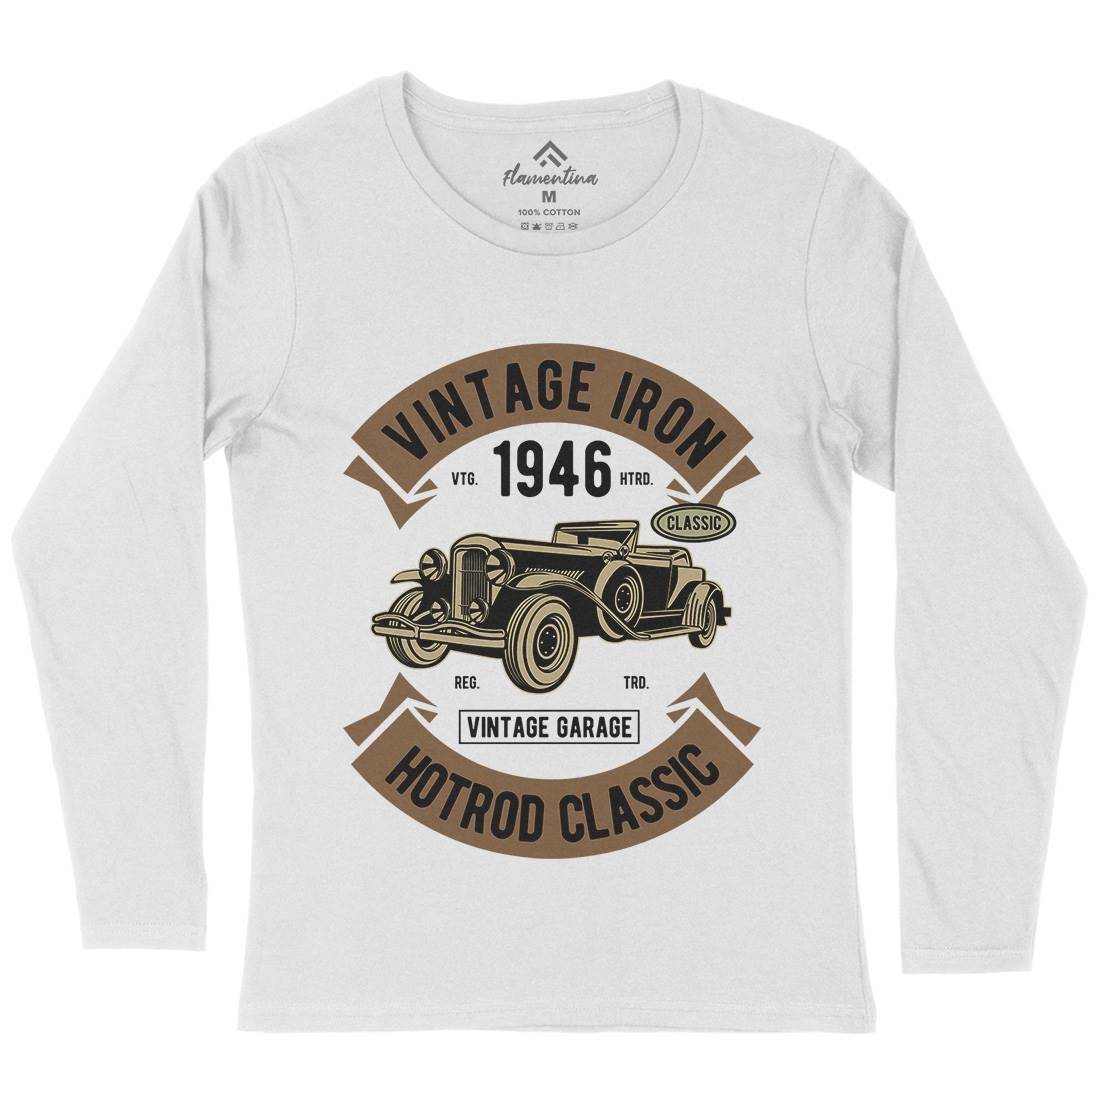 Vintage Iron Classic Womens Long Sleeve T-Shirt Cars D595